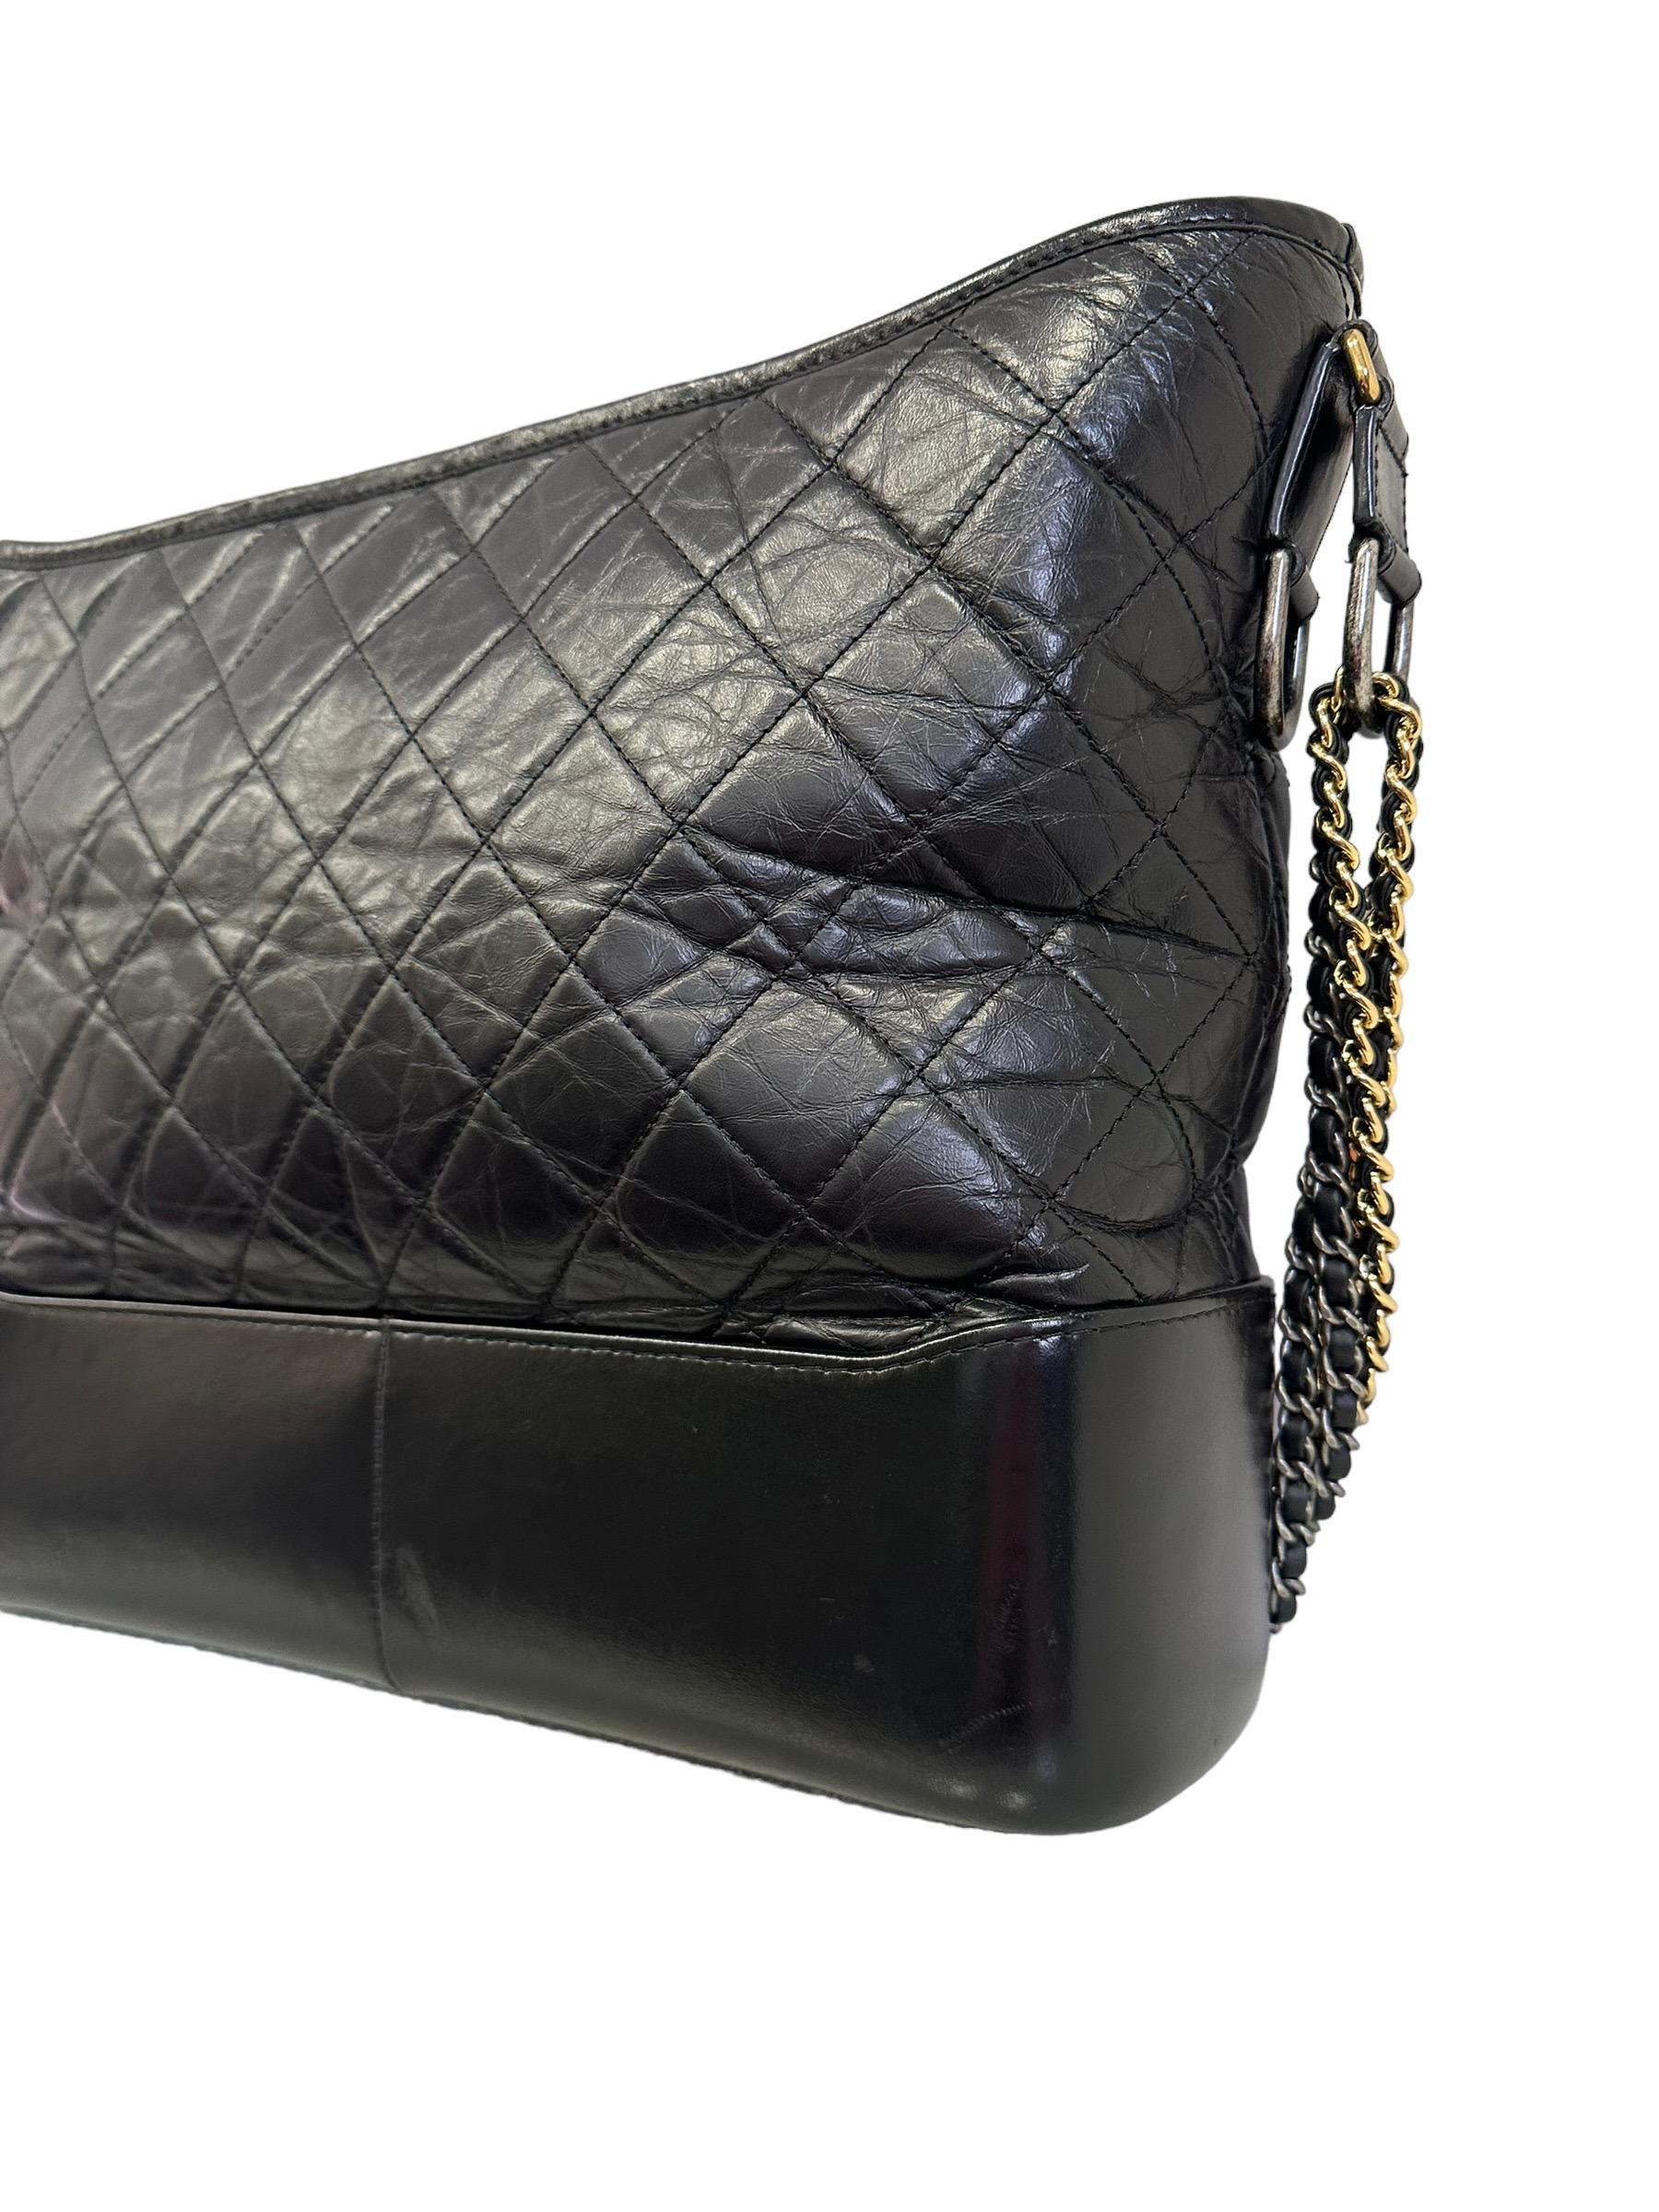 2018 Chanel Gabrielle Maxi Black Leather Top Shoulder Bag For Sale 5